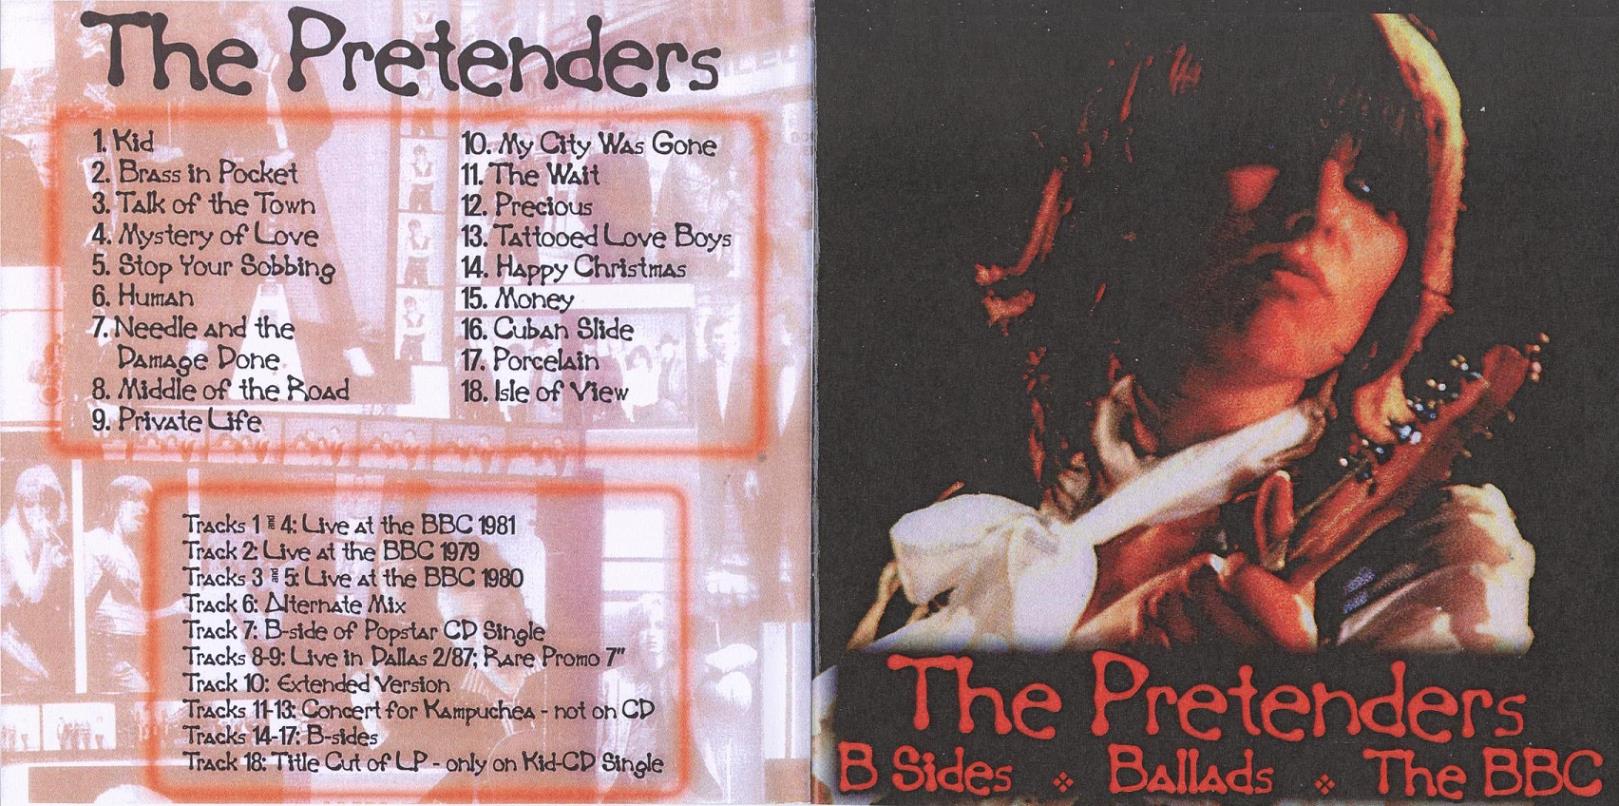 B'_sides_Ballads_&_the_BBC-front